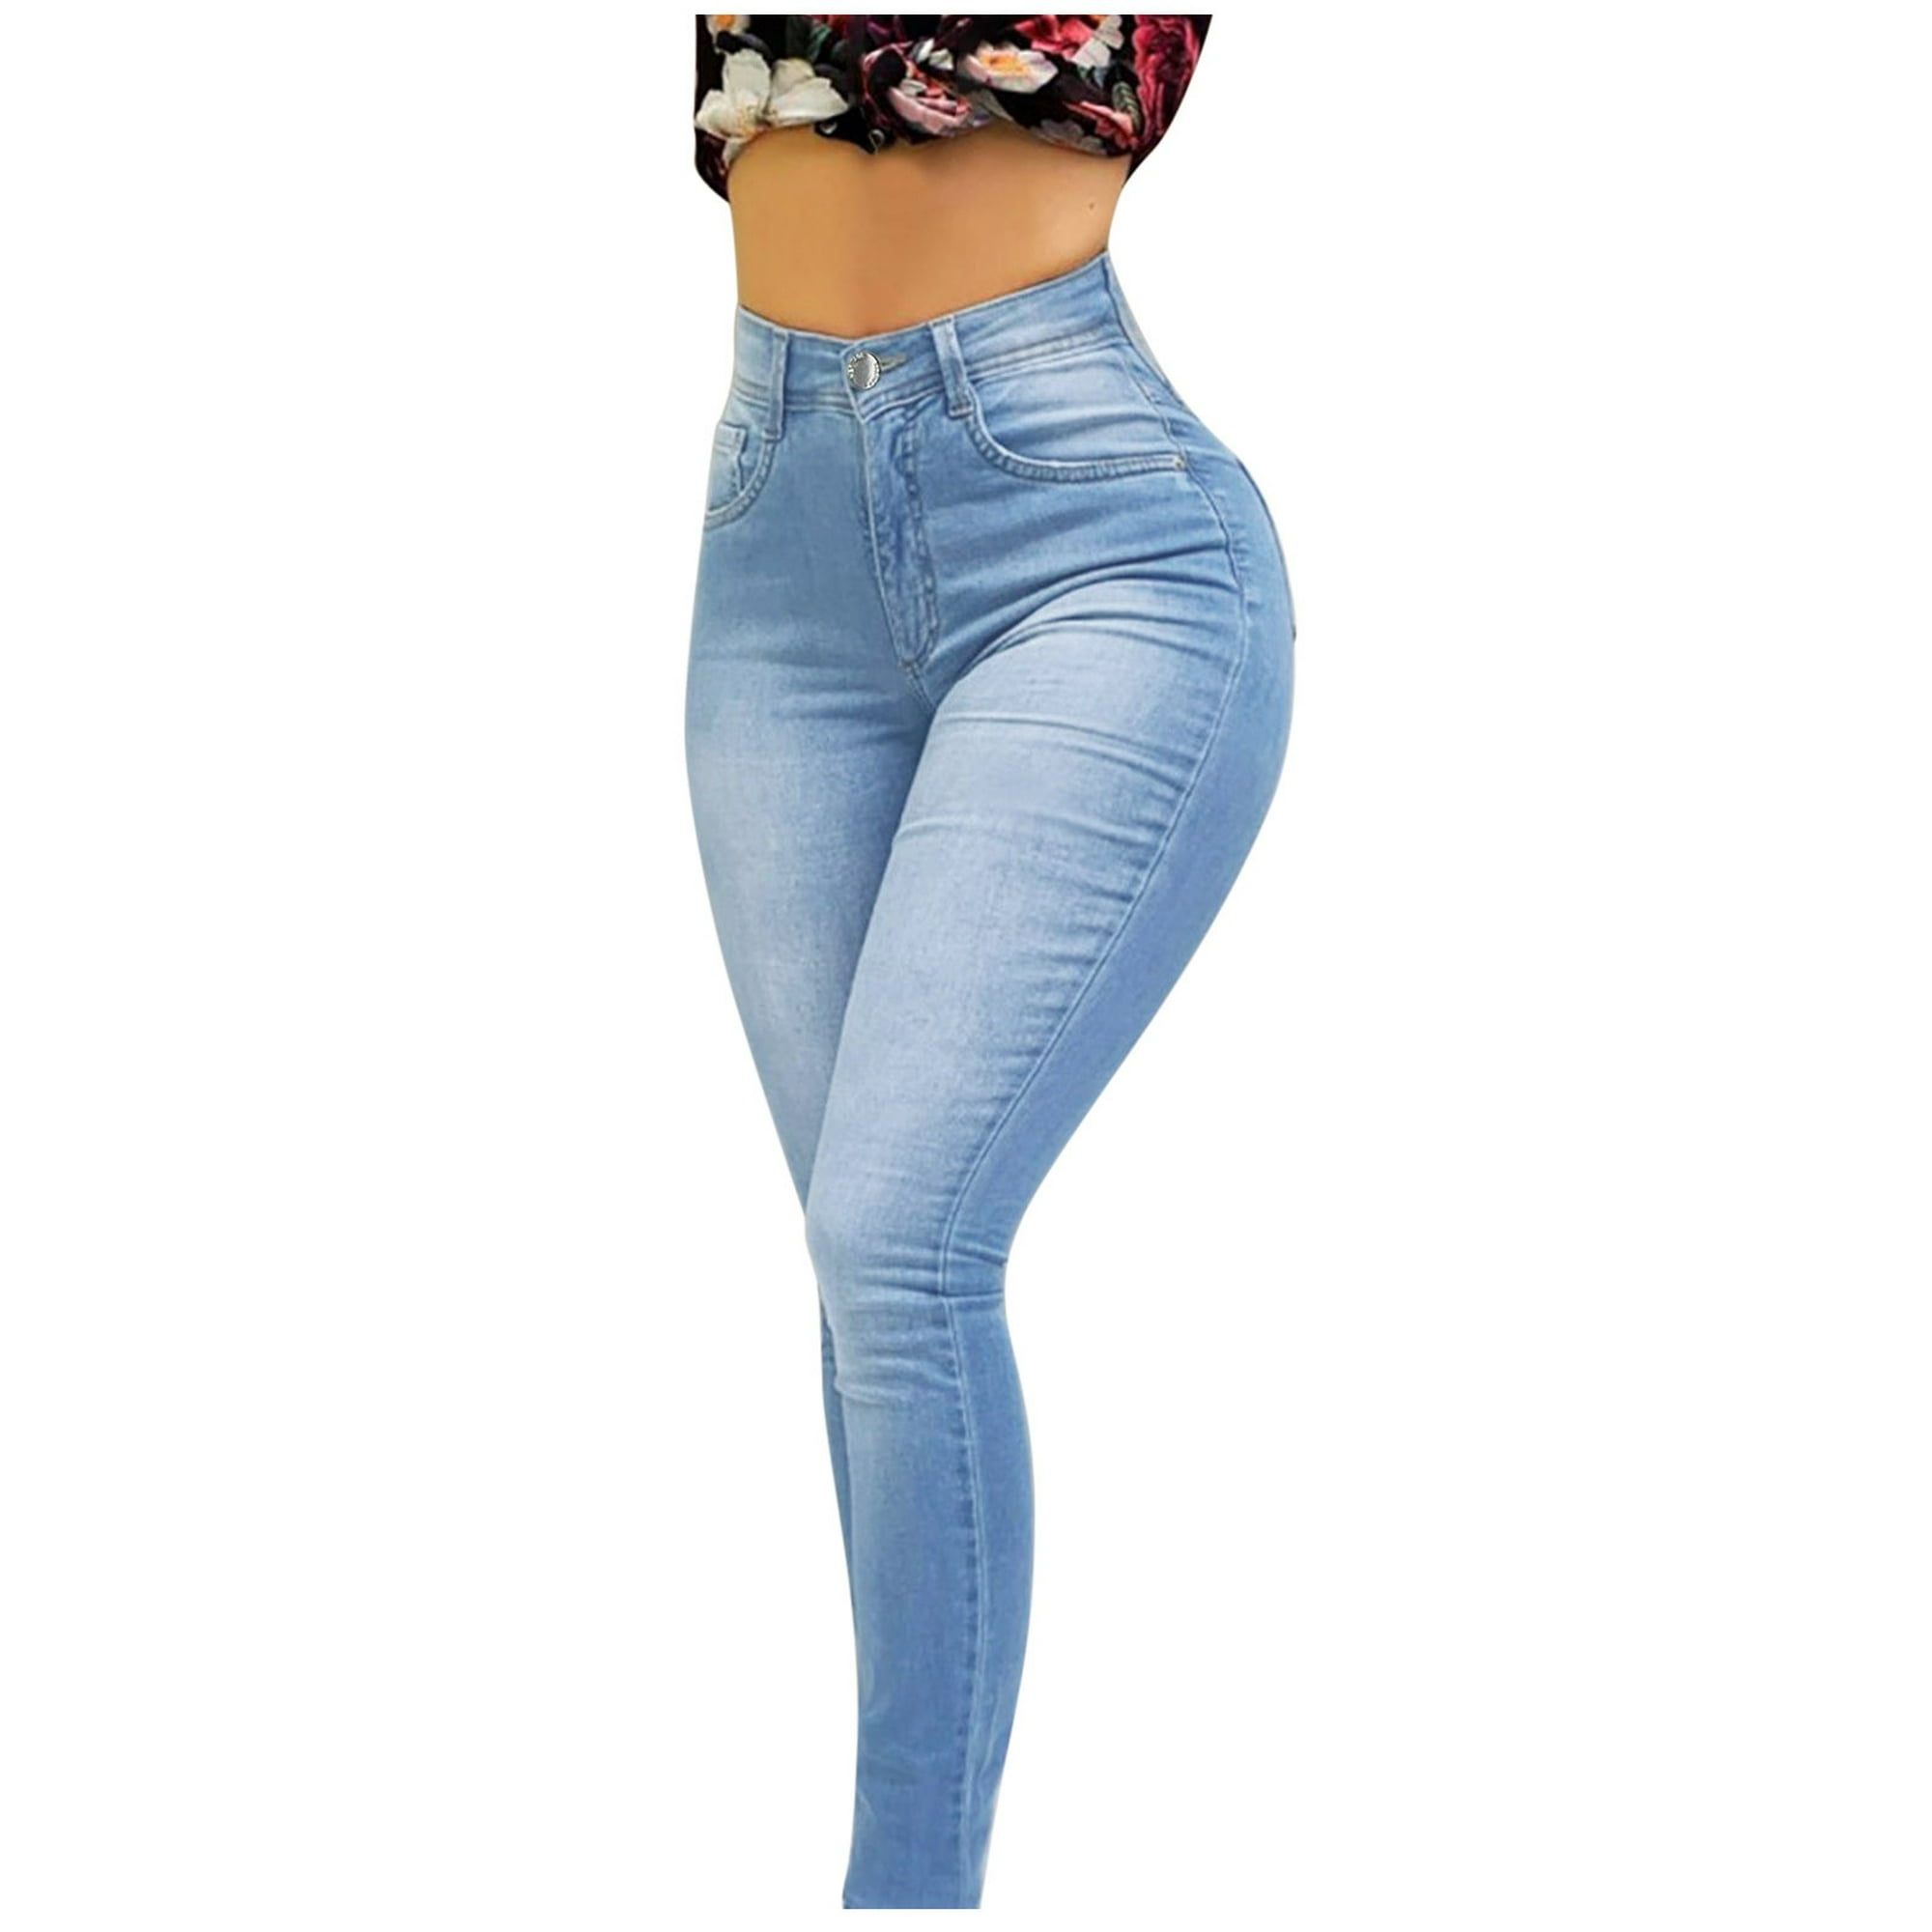 Gibobby Jeans Pantalones de mujer Pantalones vaqueros clásicos para mujer,  informales, ajustados, de cintura alta, color gris , pantalones(Gris  oscuro,M)